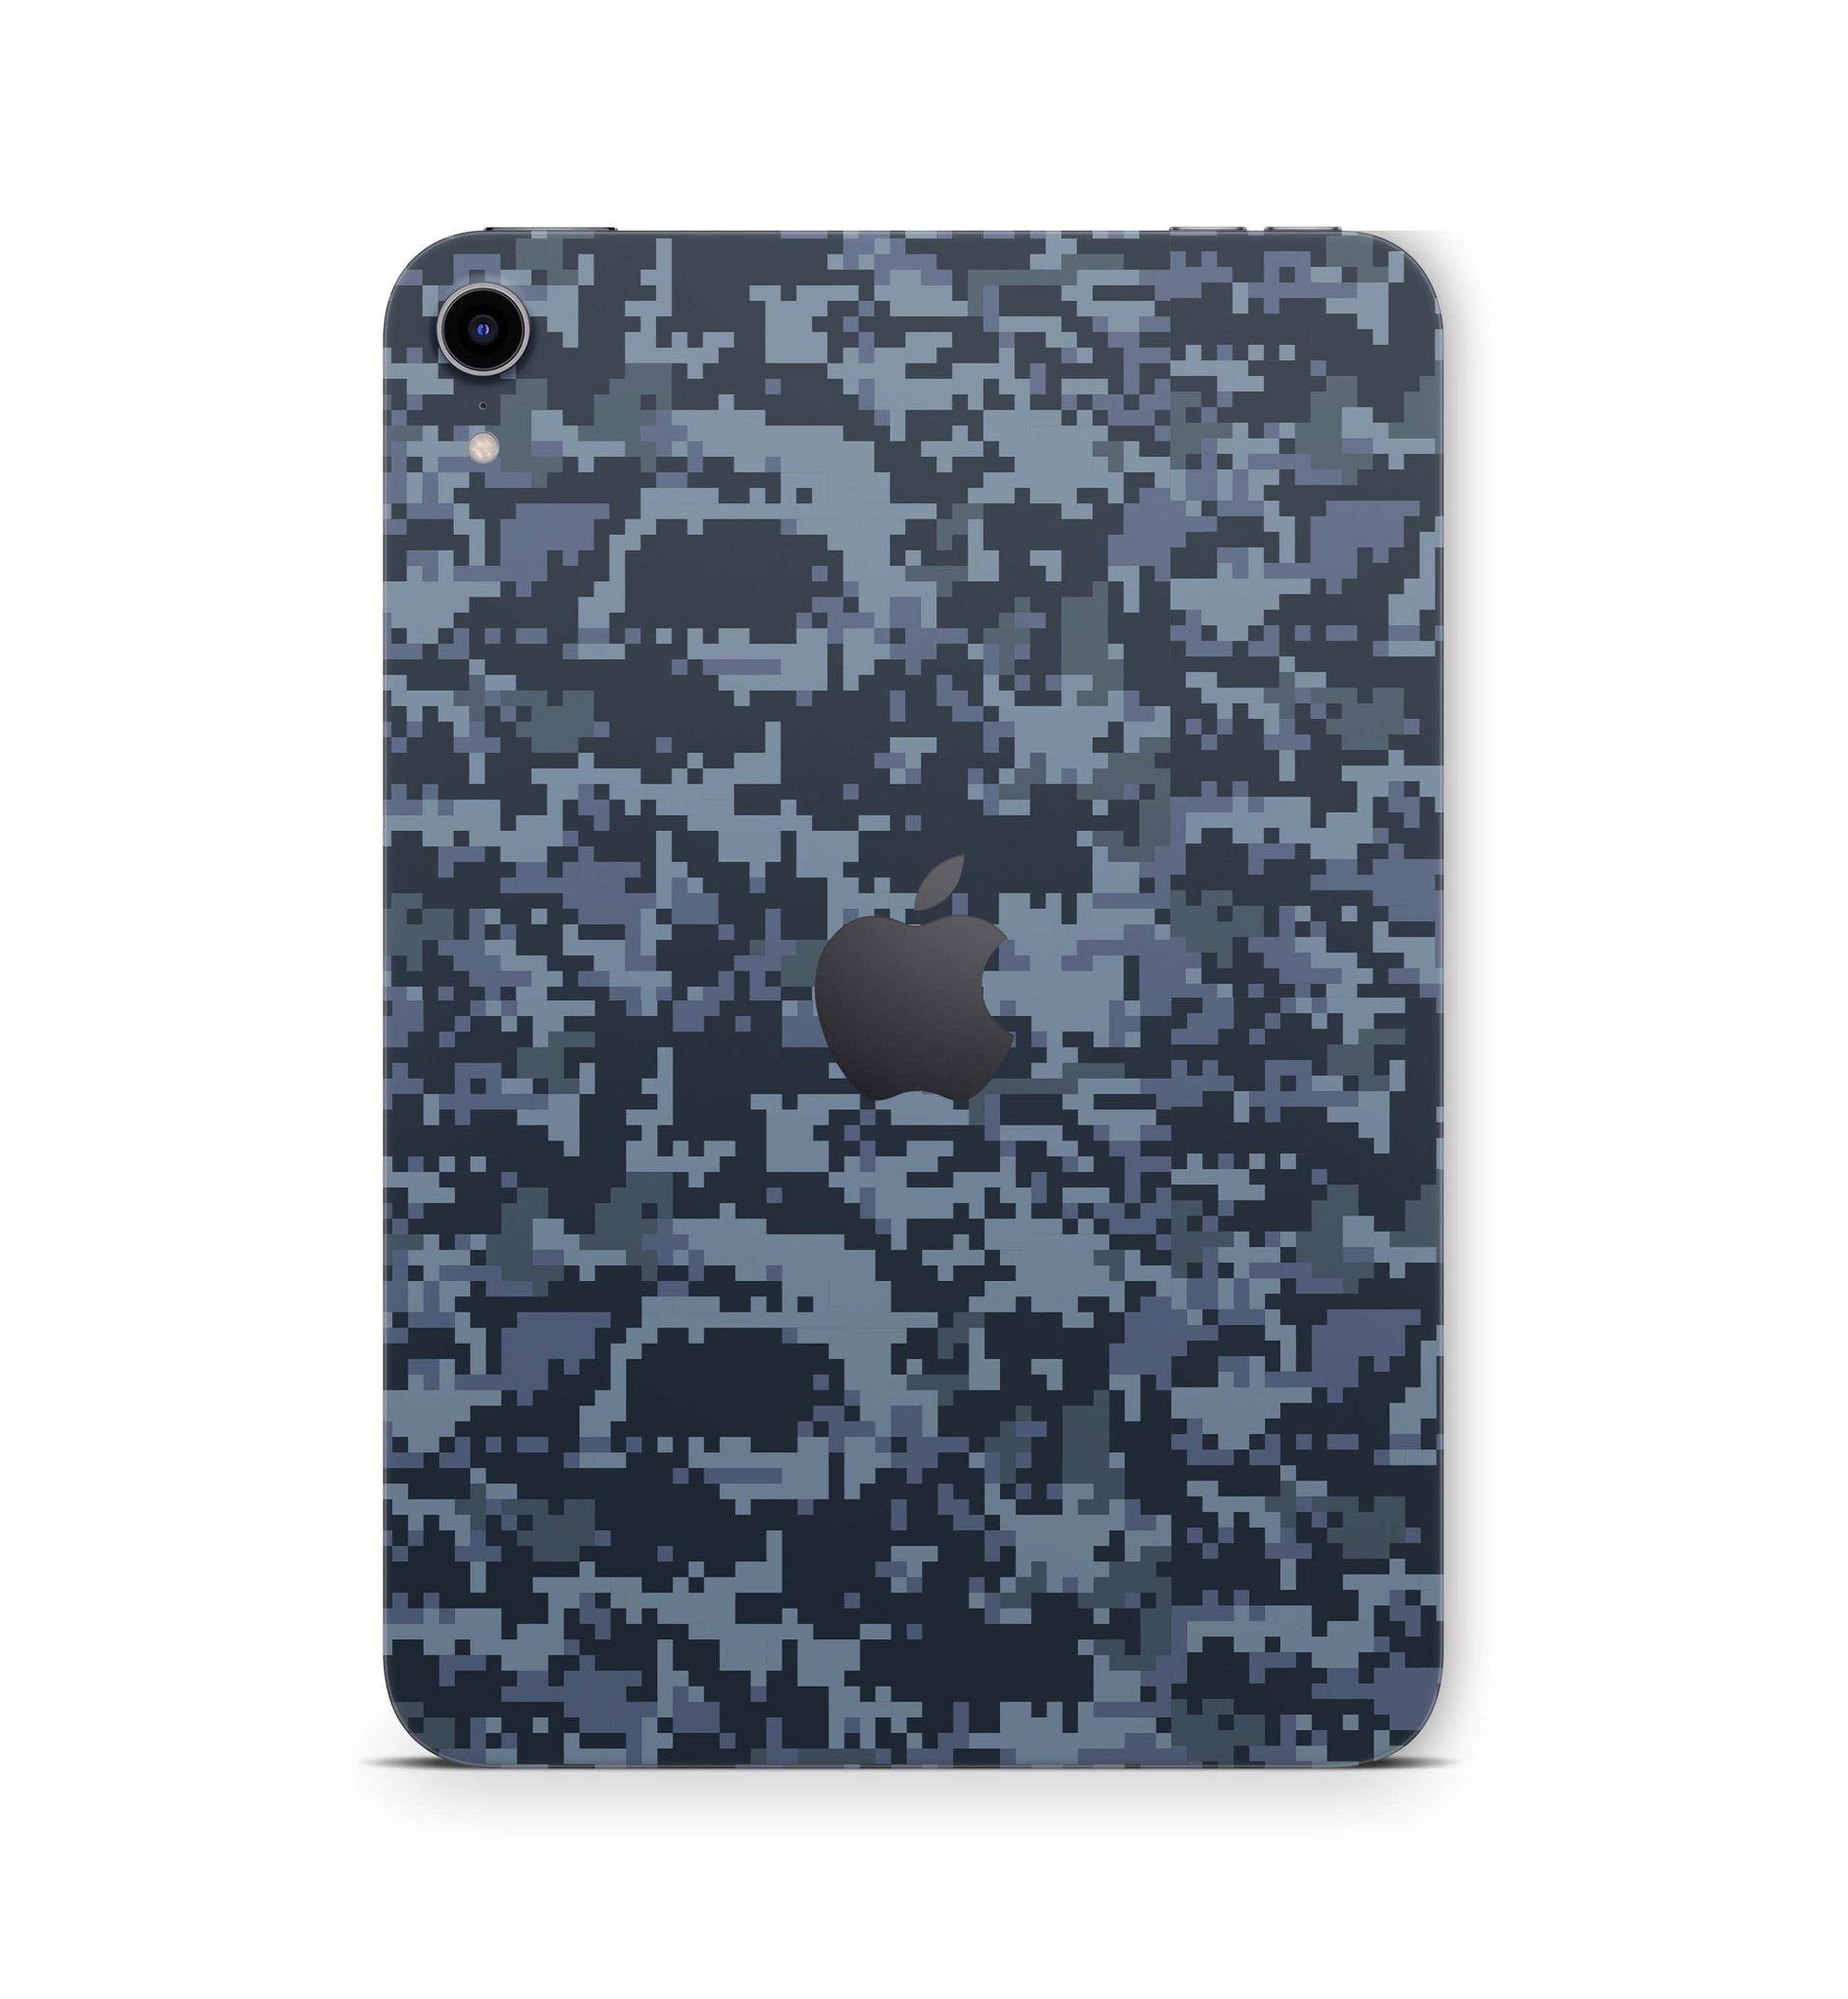 iPad Mini Skin Design Cover Folie Vinyl Skins & Wraps für alle iPad Mini Modelle Aufkleber Skins4u Navy-Camo  